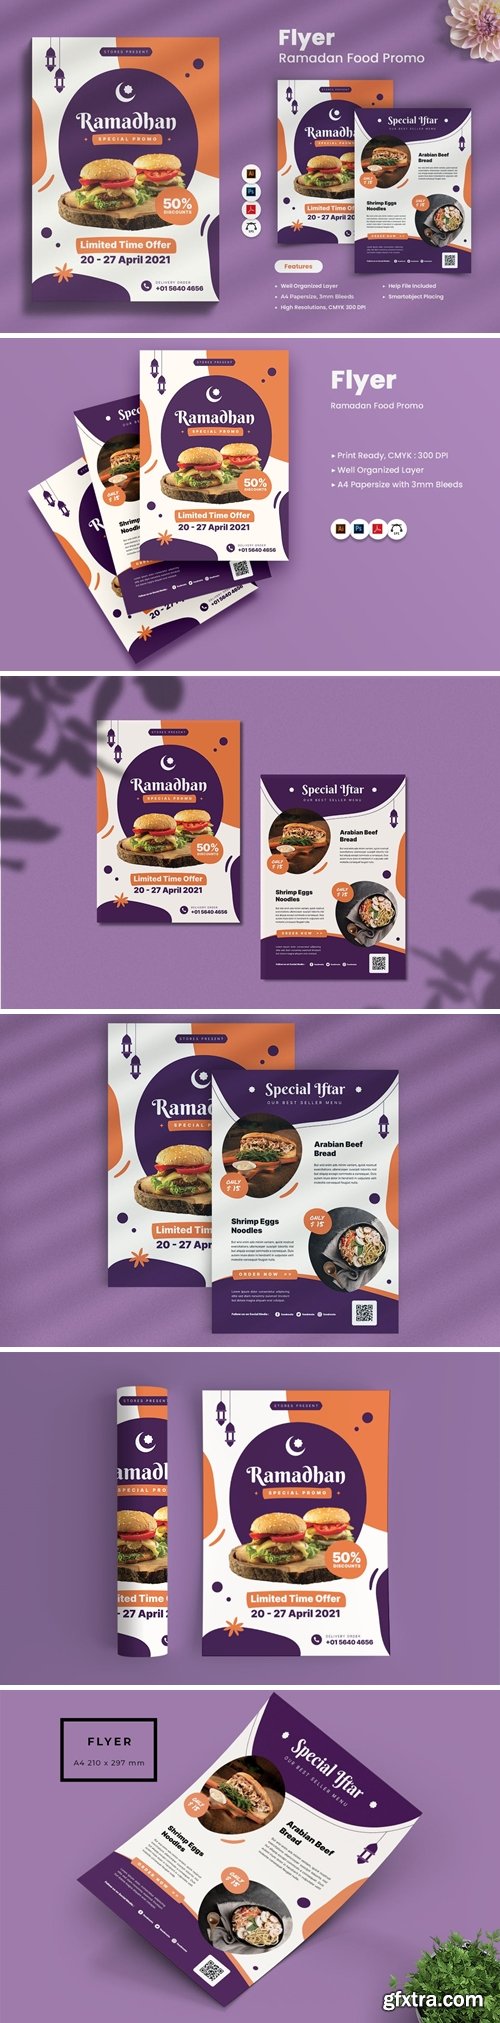 Ramadan Food Promo Flyer